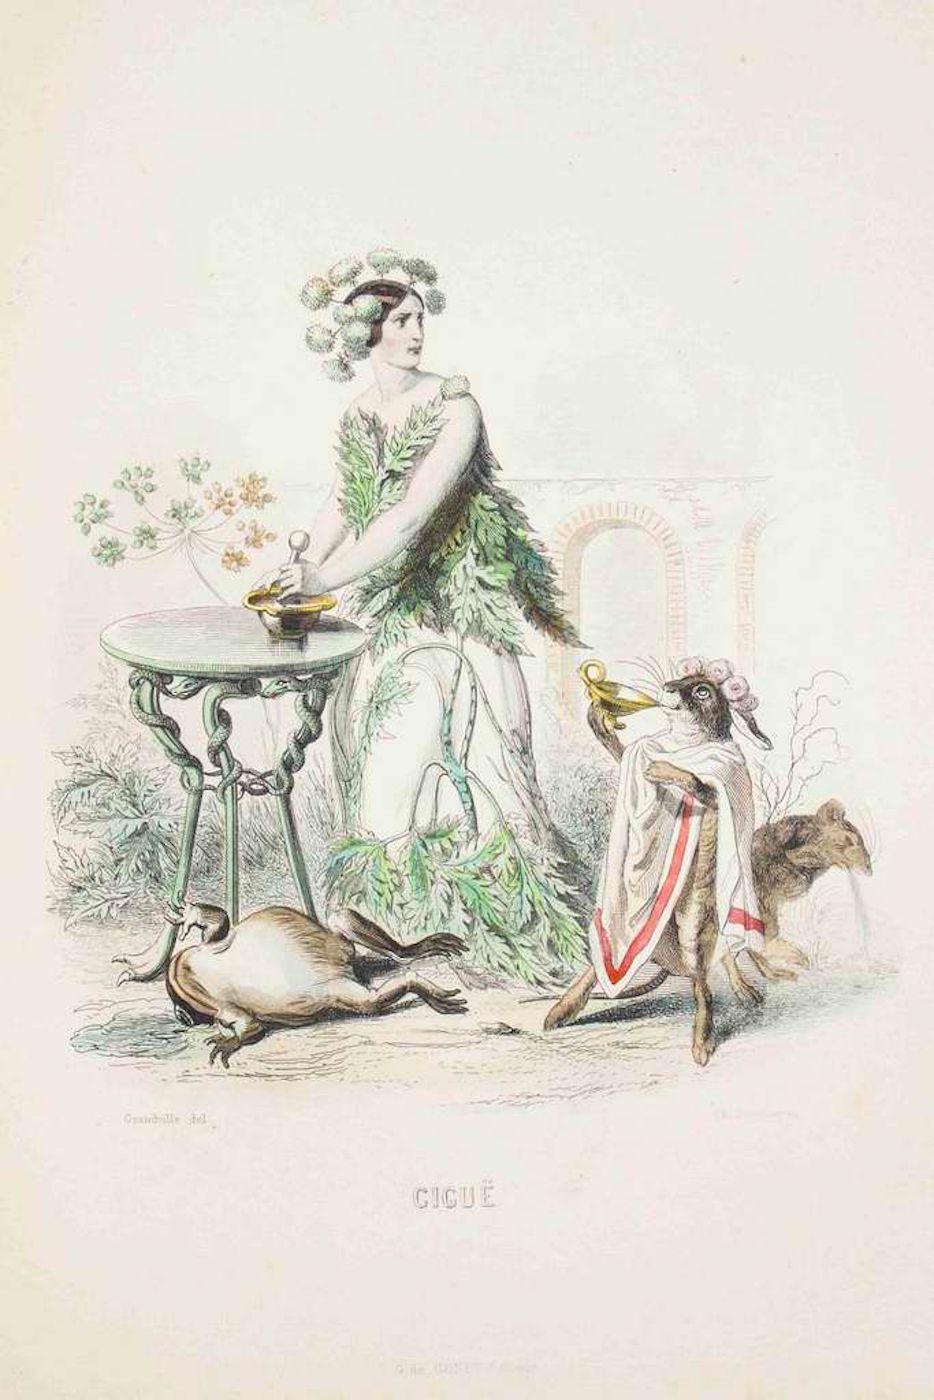 J. J. Grandville Figurative Print - Cigue - Les Fleurs Animées Vol.I - Litho by J.J. Grandville - 1847